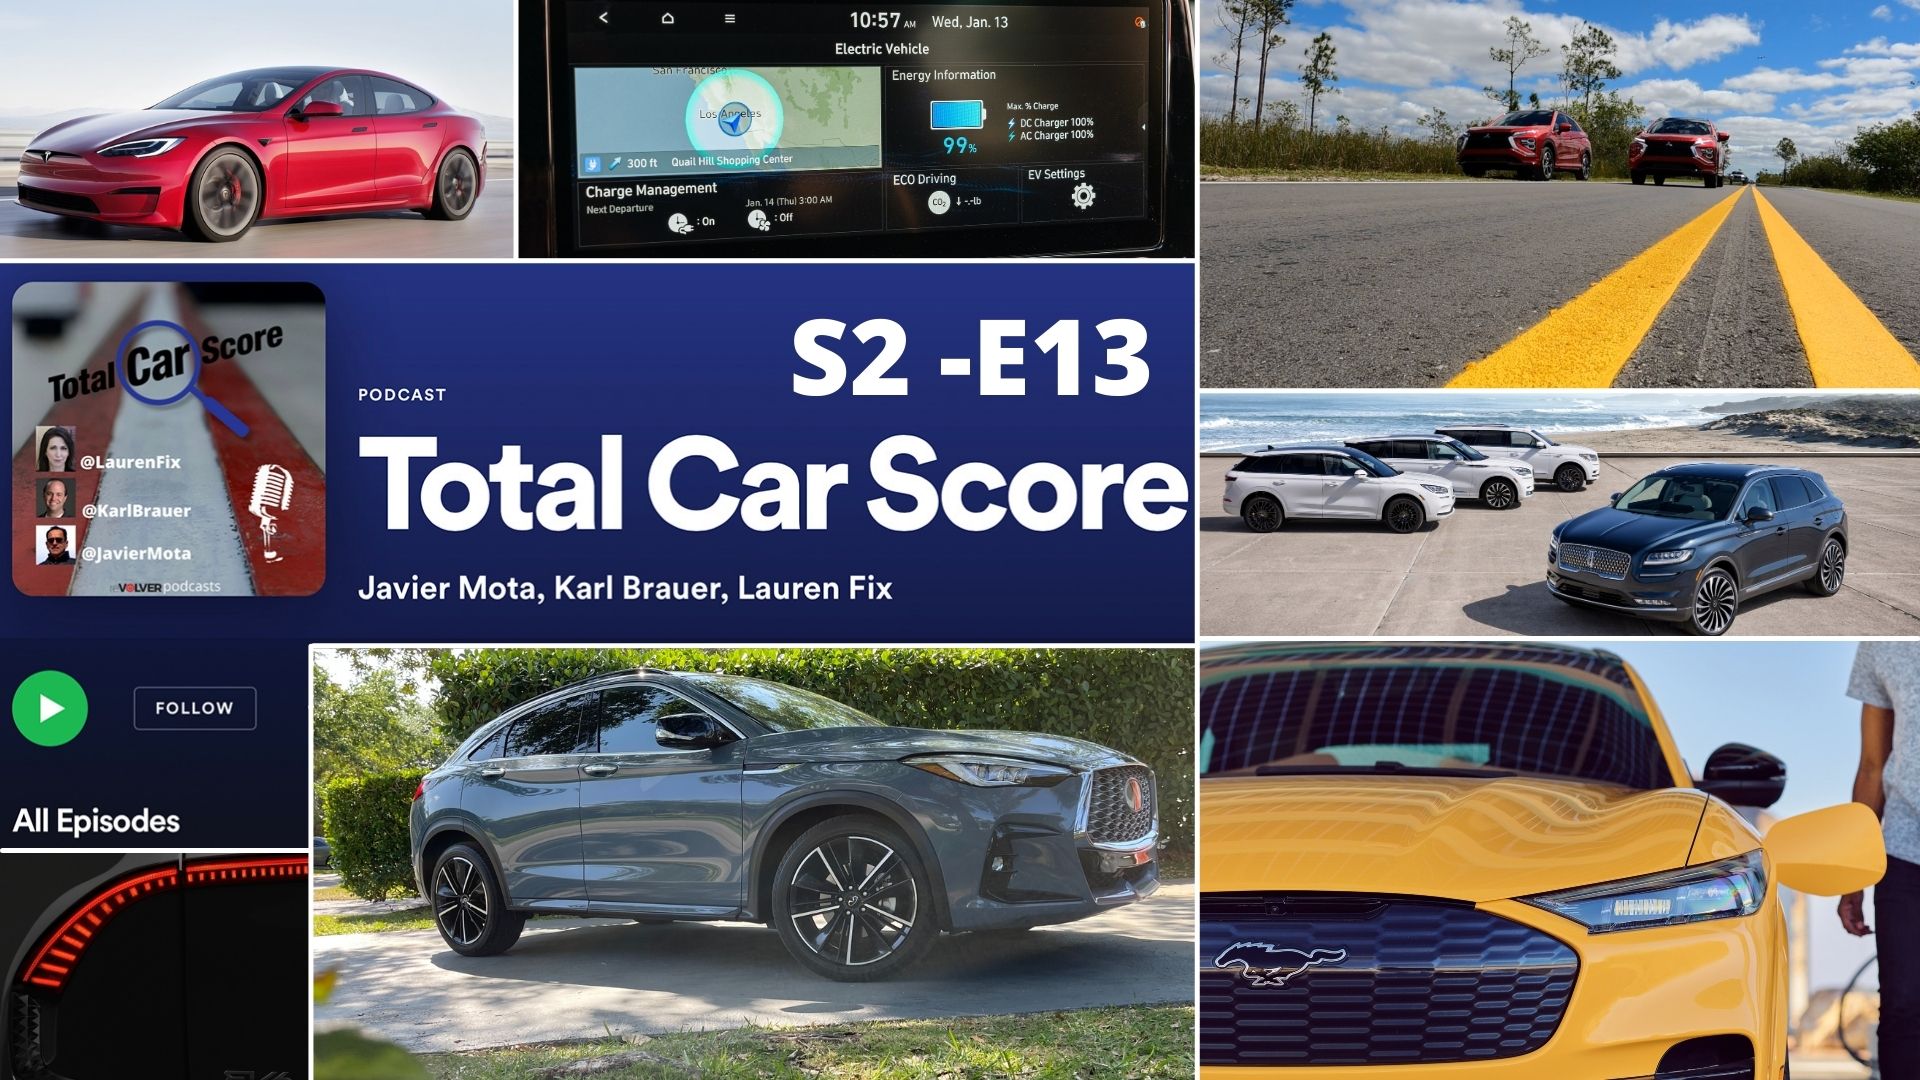 Total Car Score Podcast s2 - E13